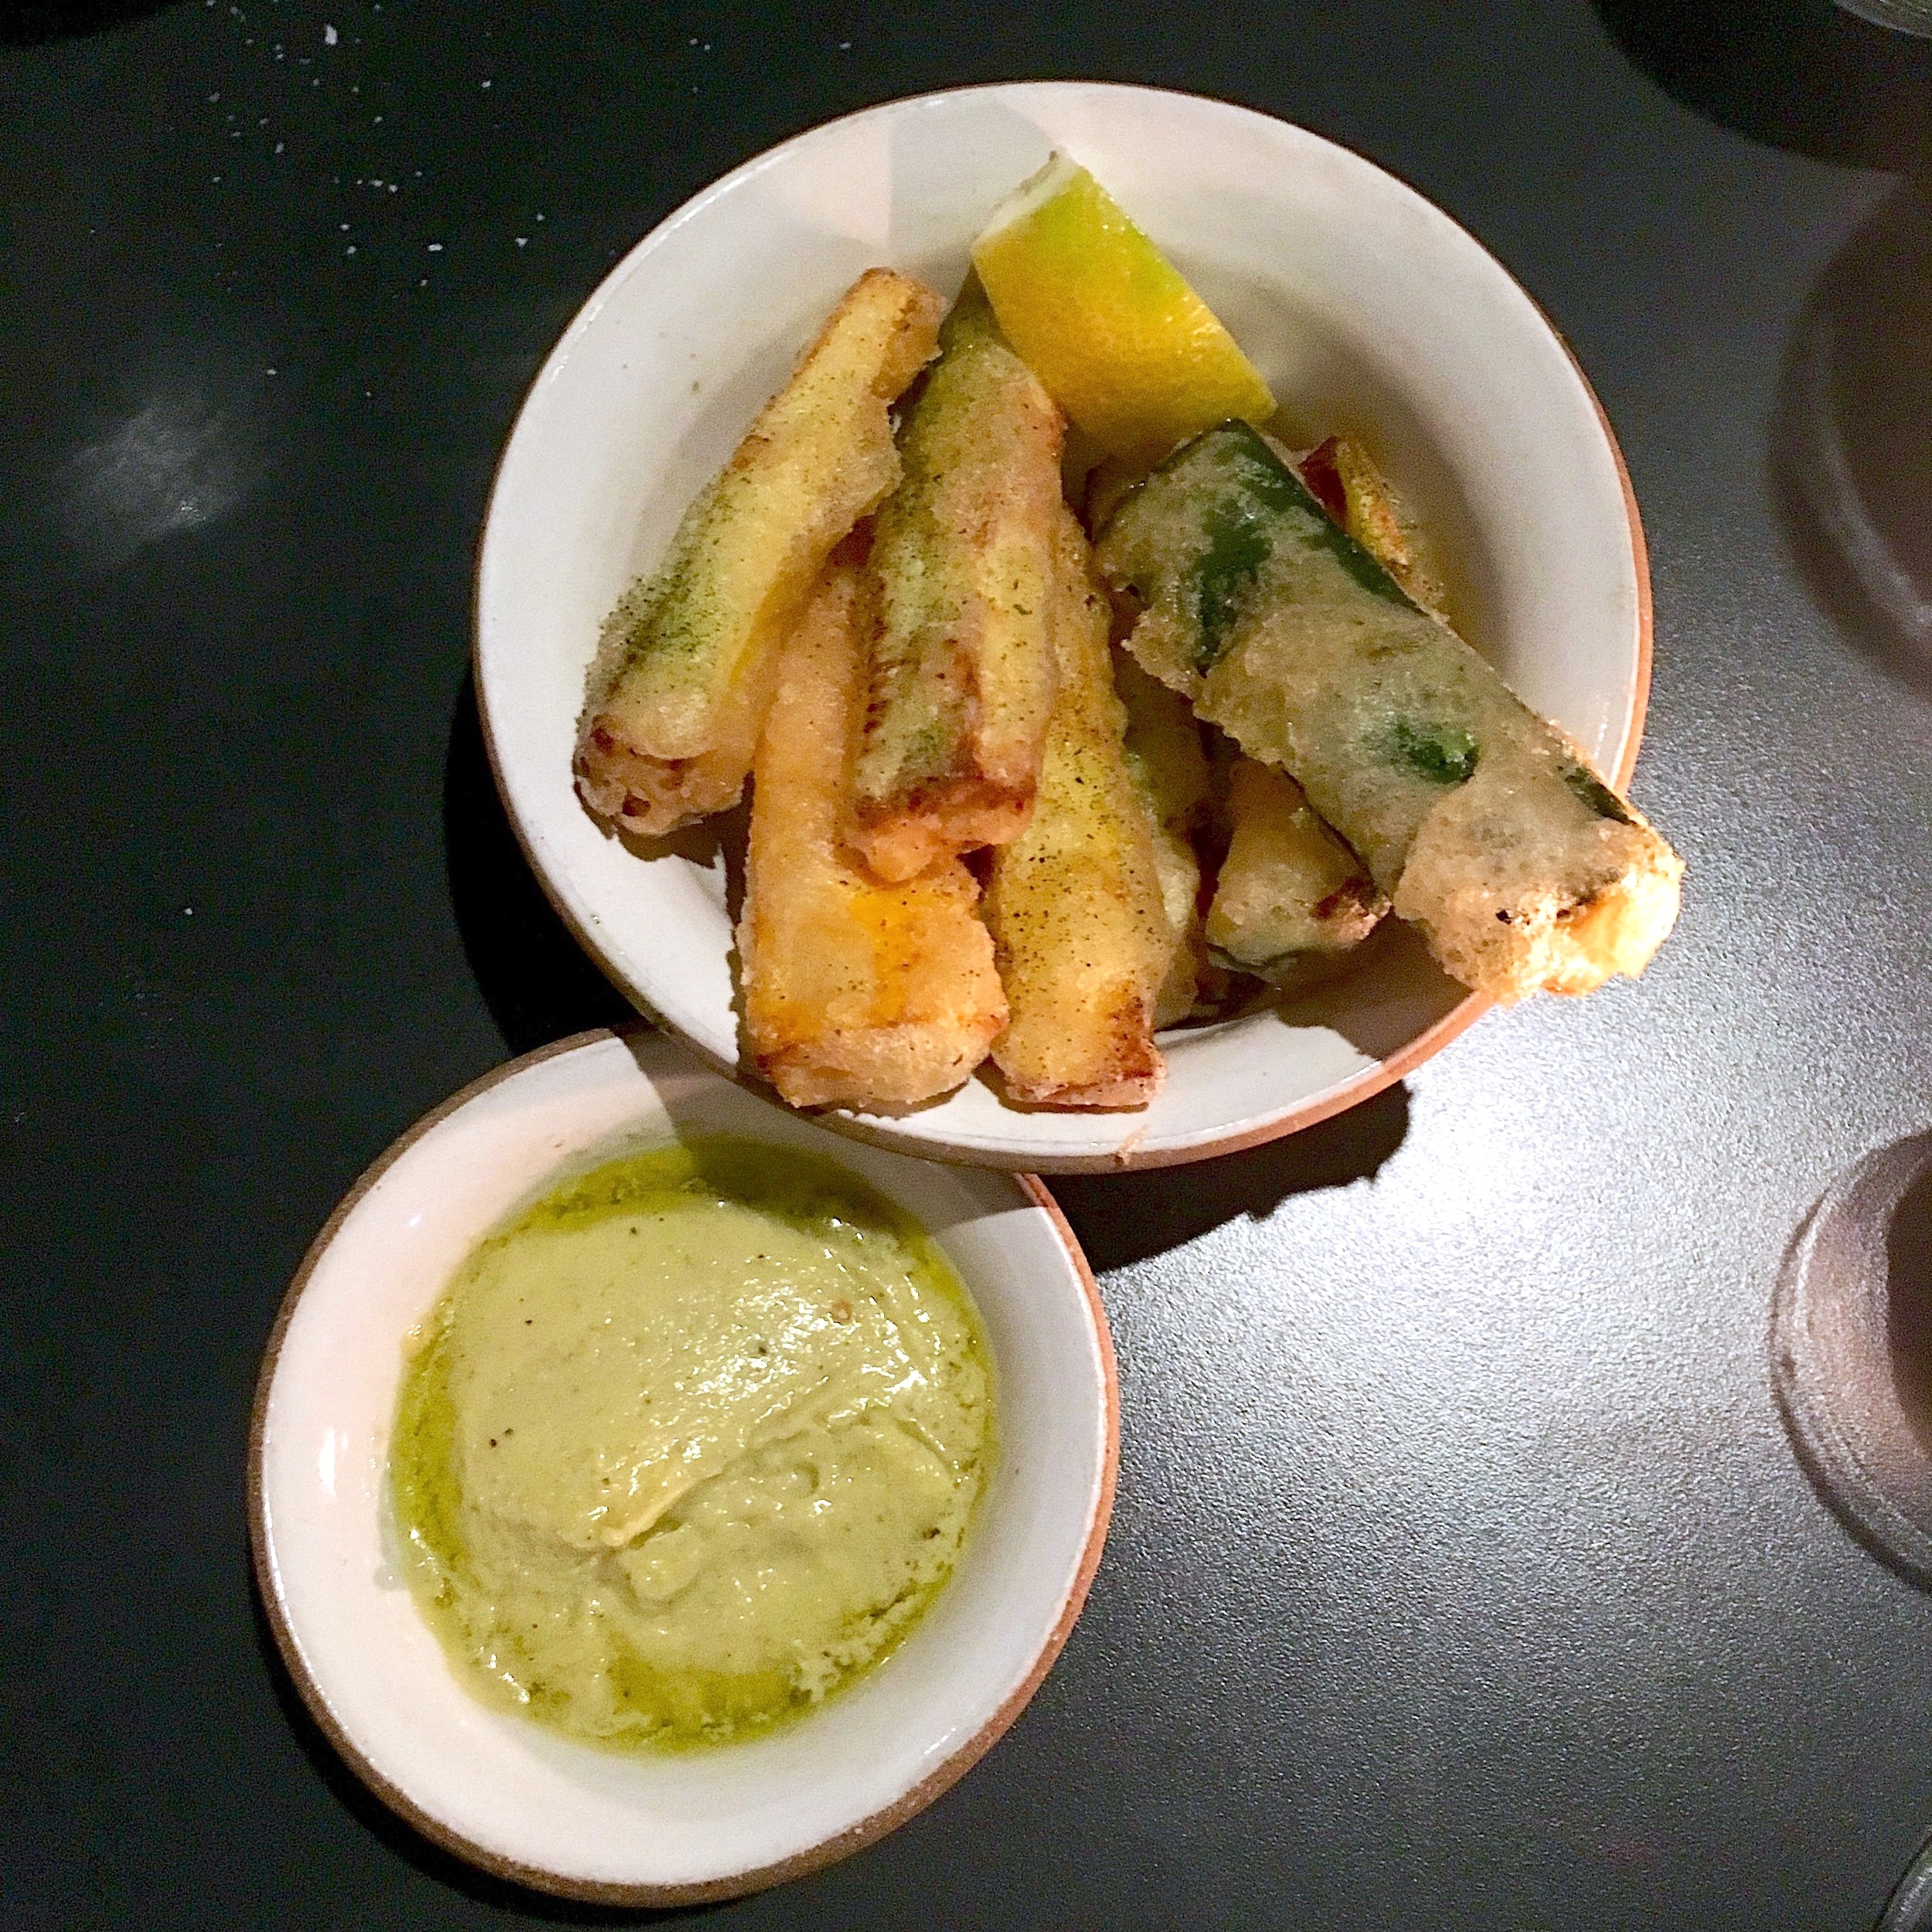 zucchini "fries", lemon-parmesan dressing